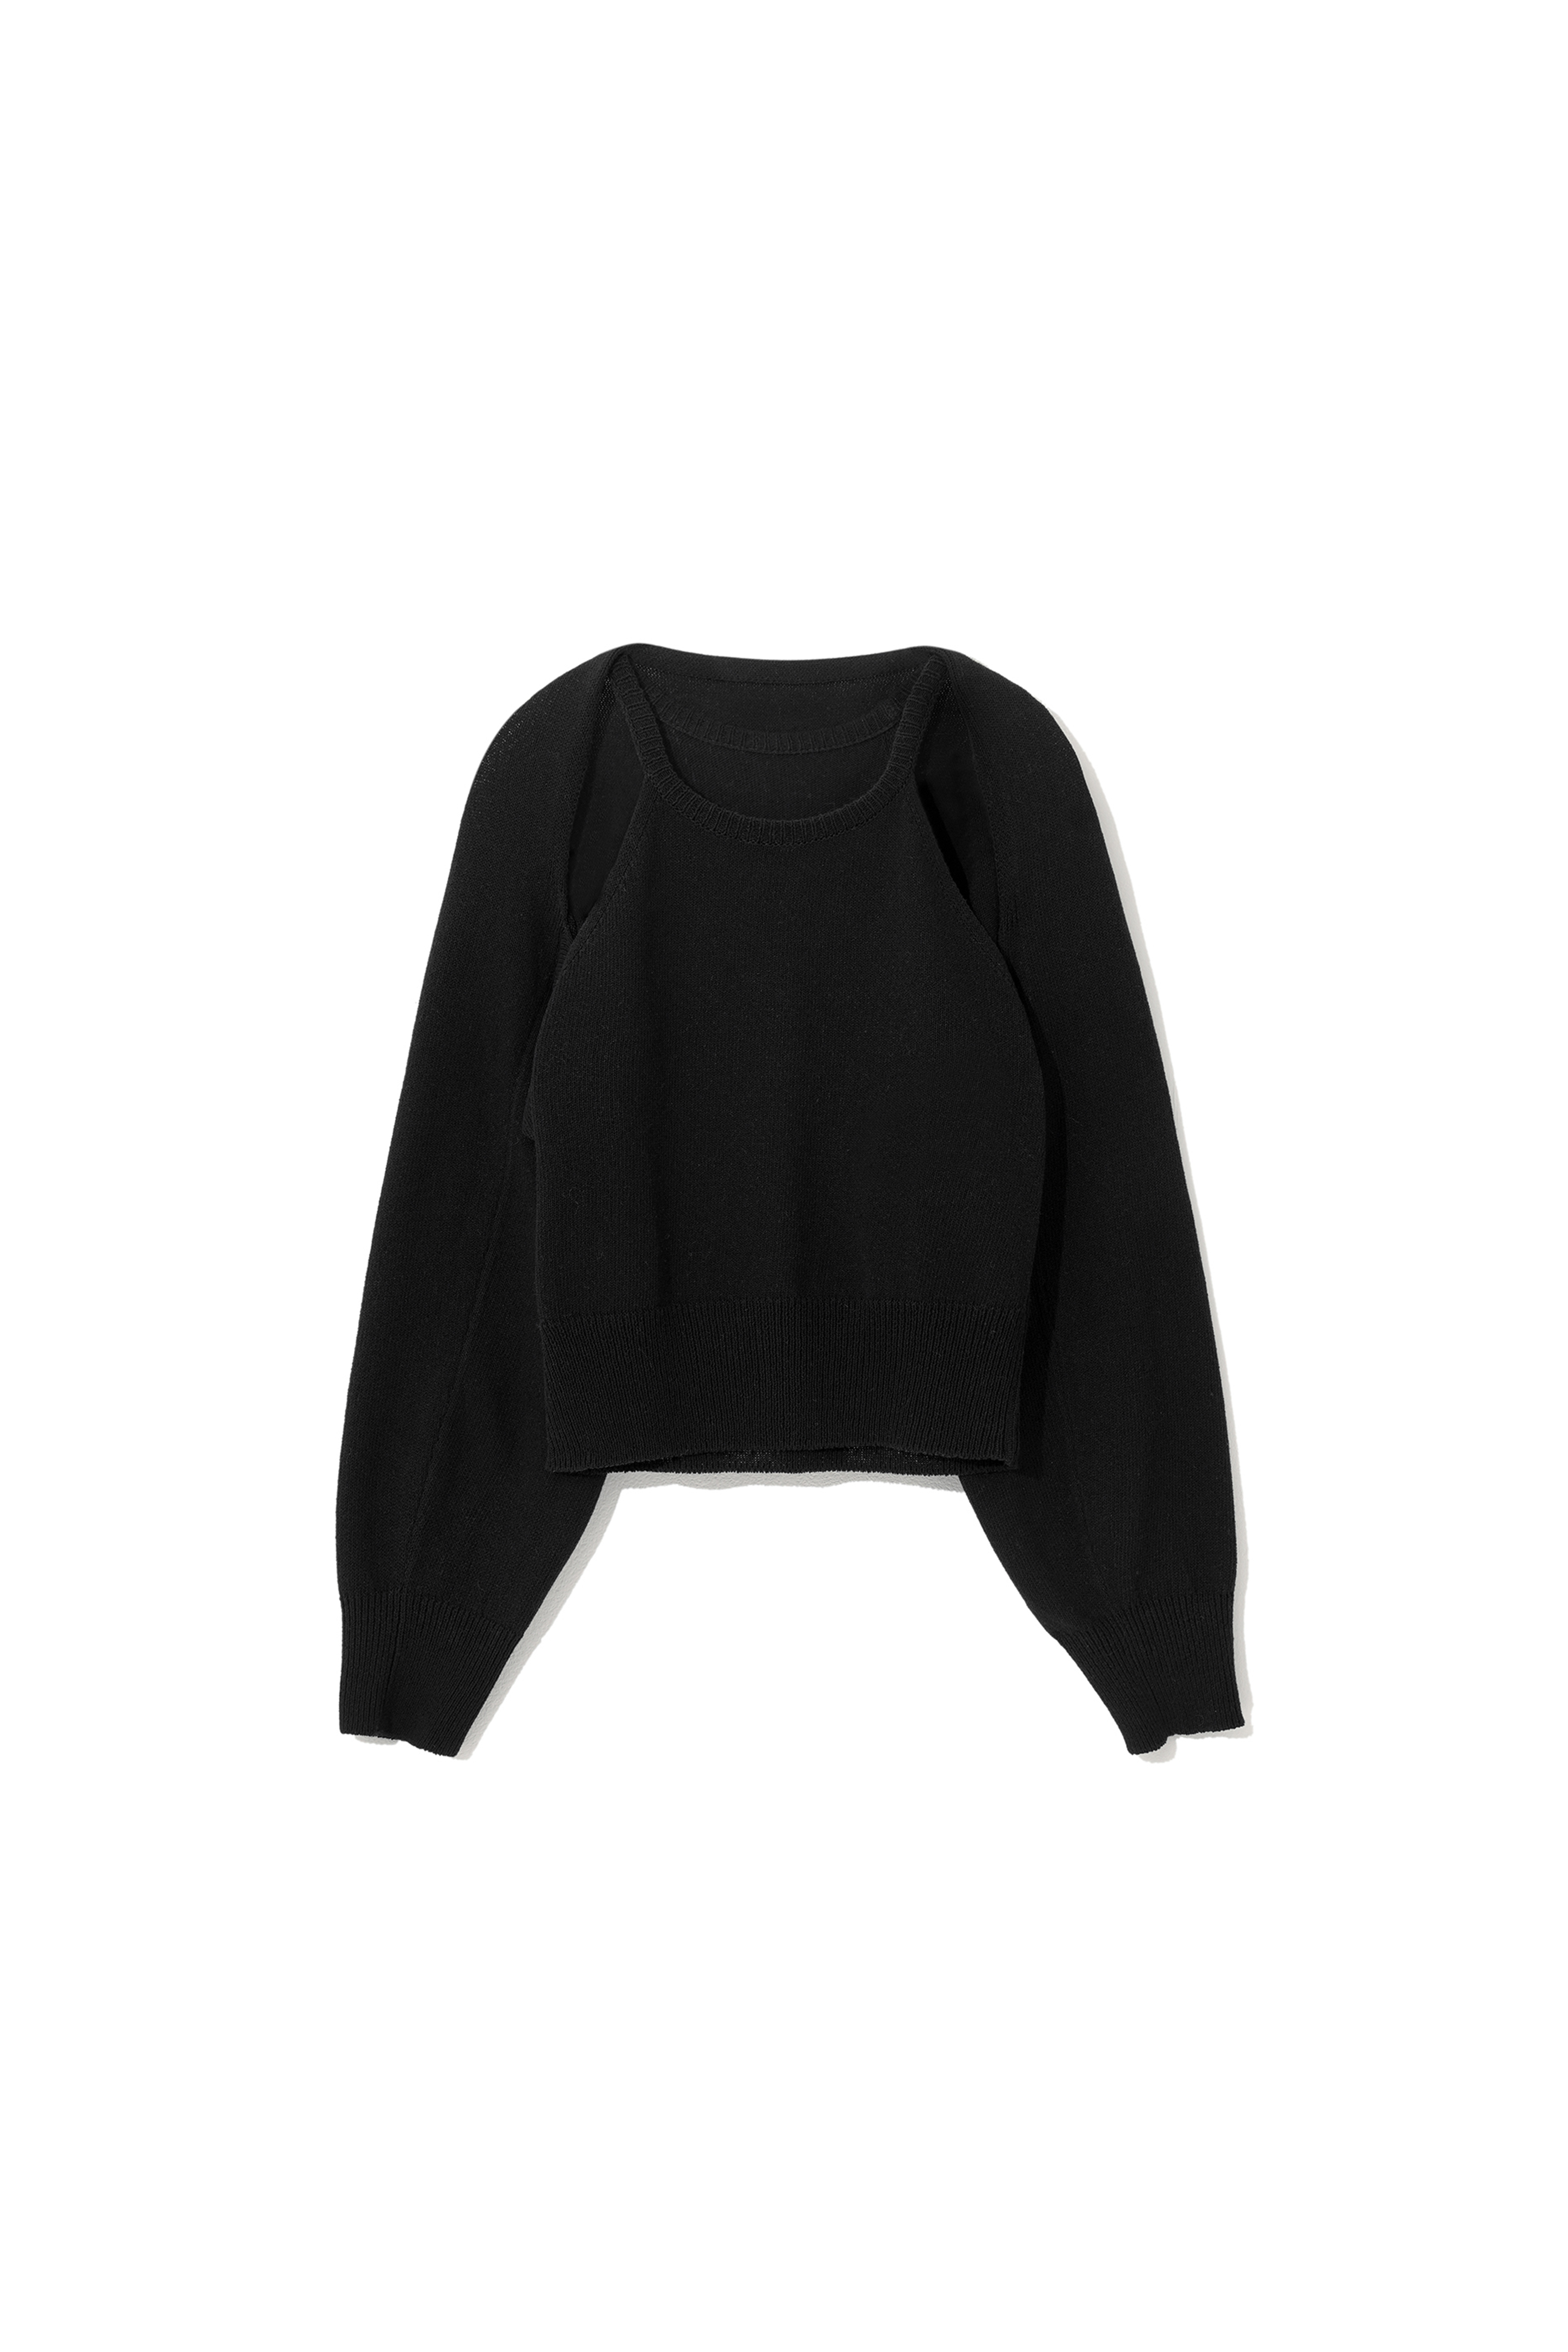 (Exclusive) Bolero knitted Set-Up Black